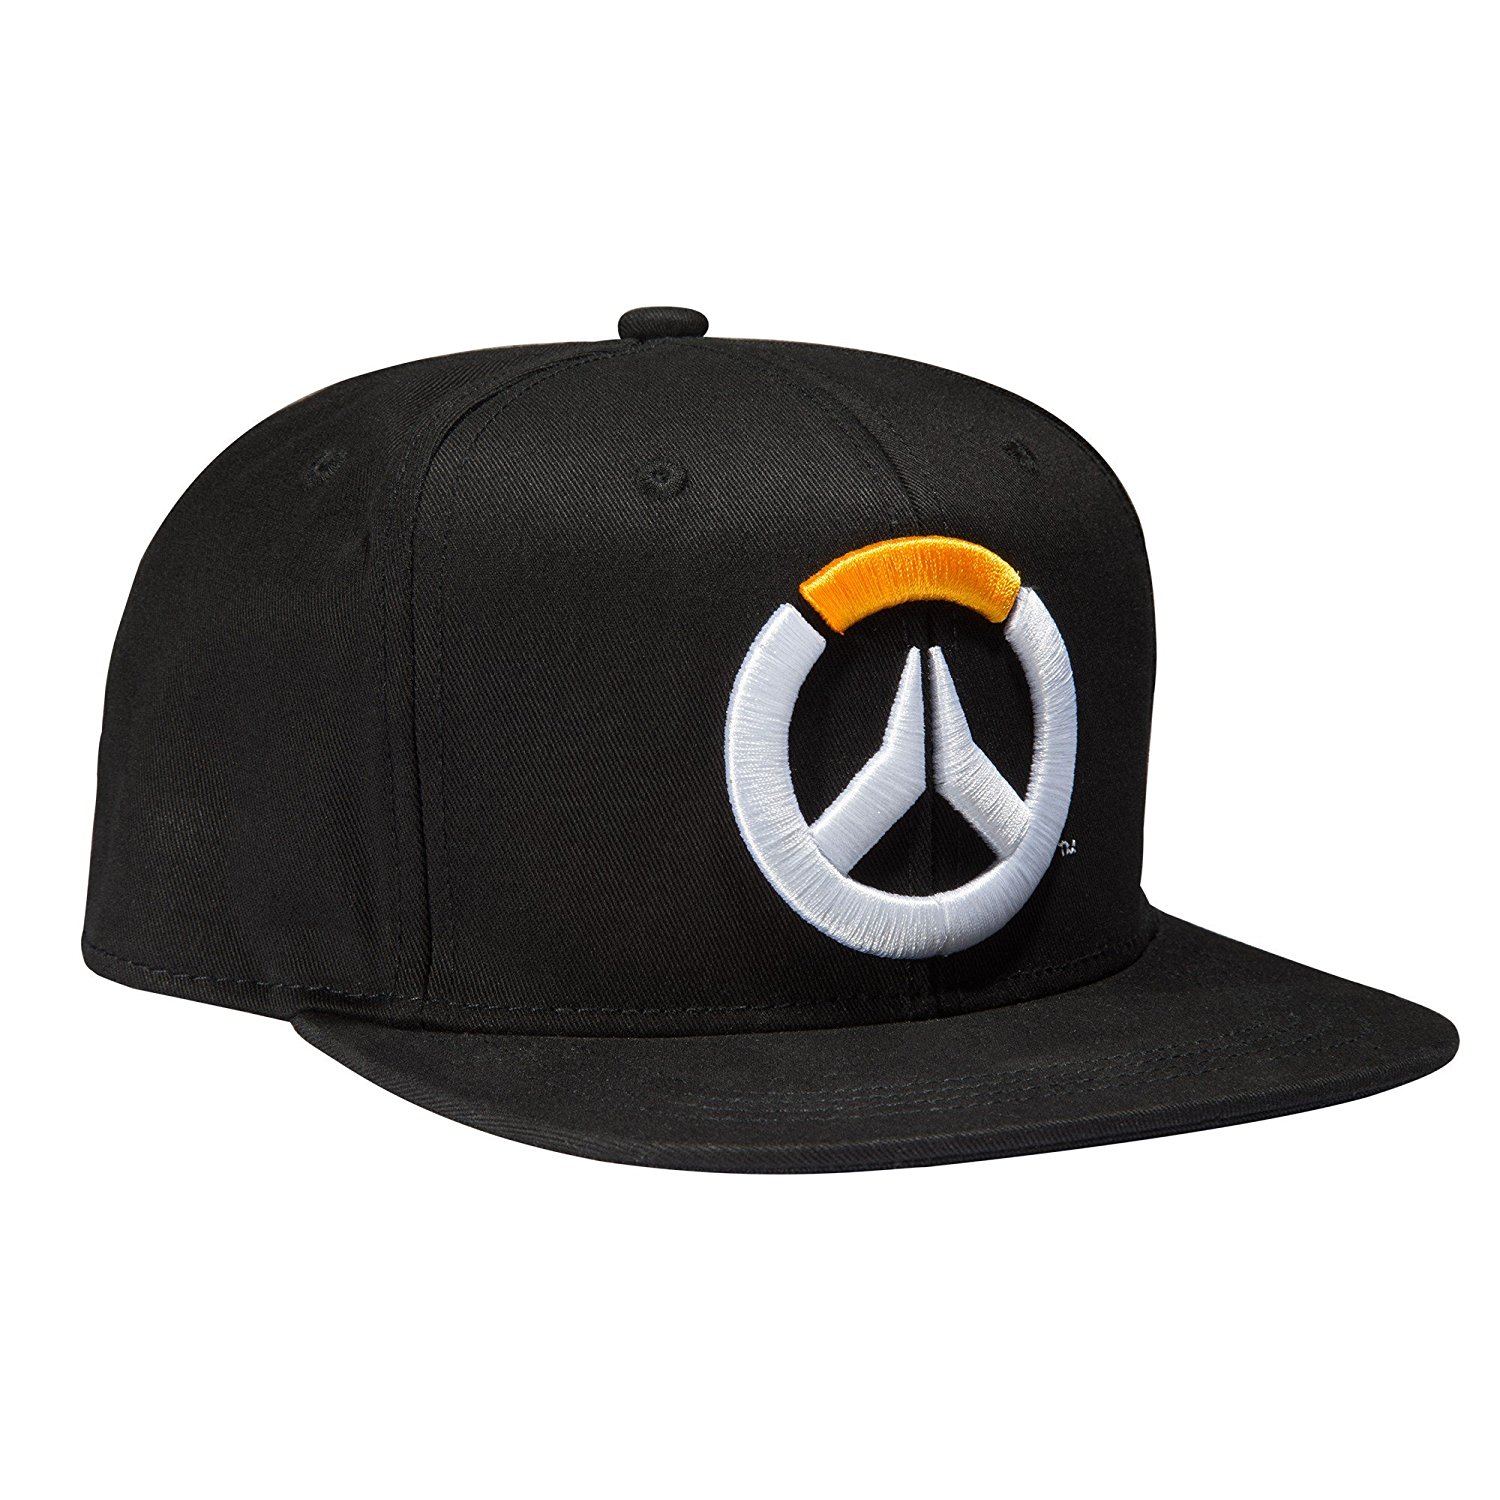 JINX Overwatch Baseball Hat